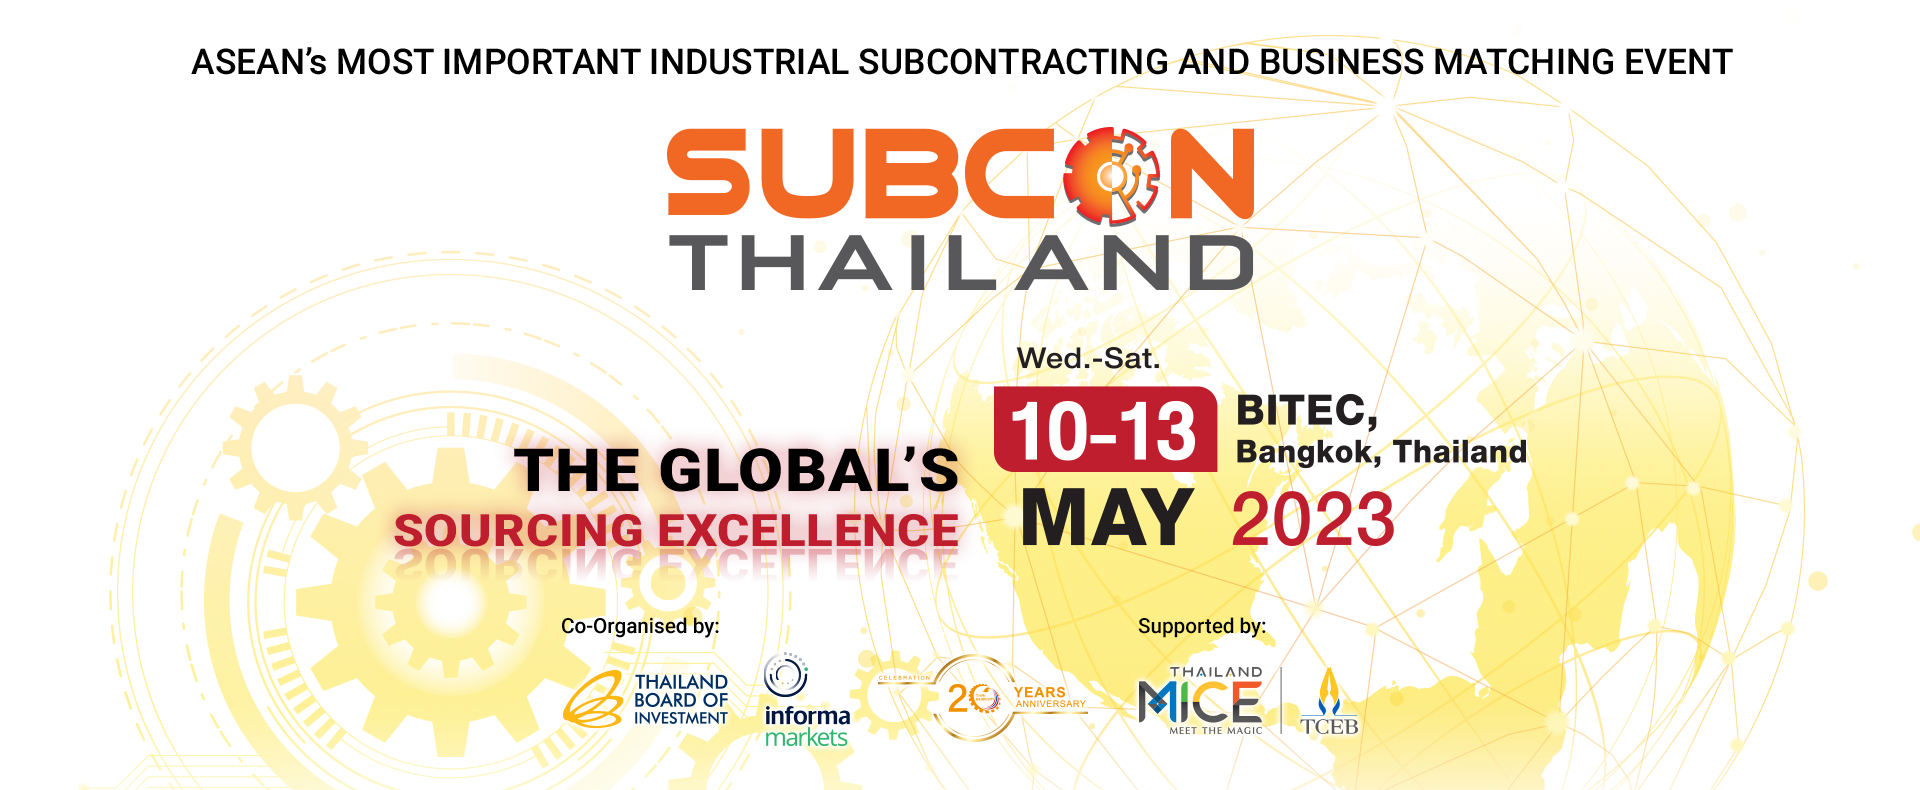 SUBCON Thailand